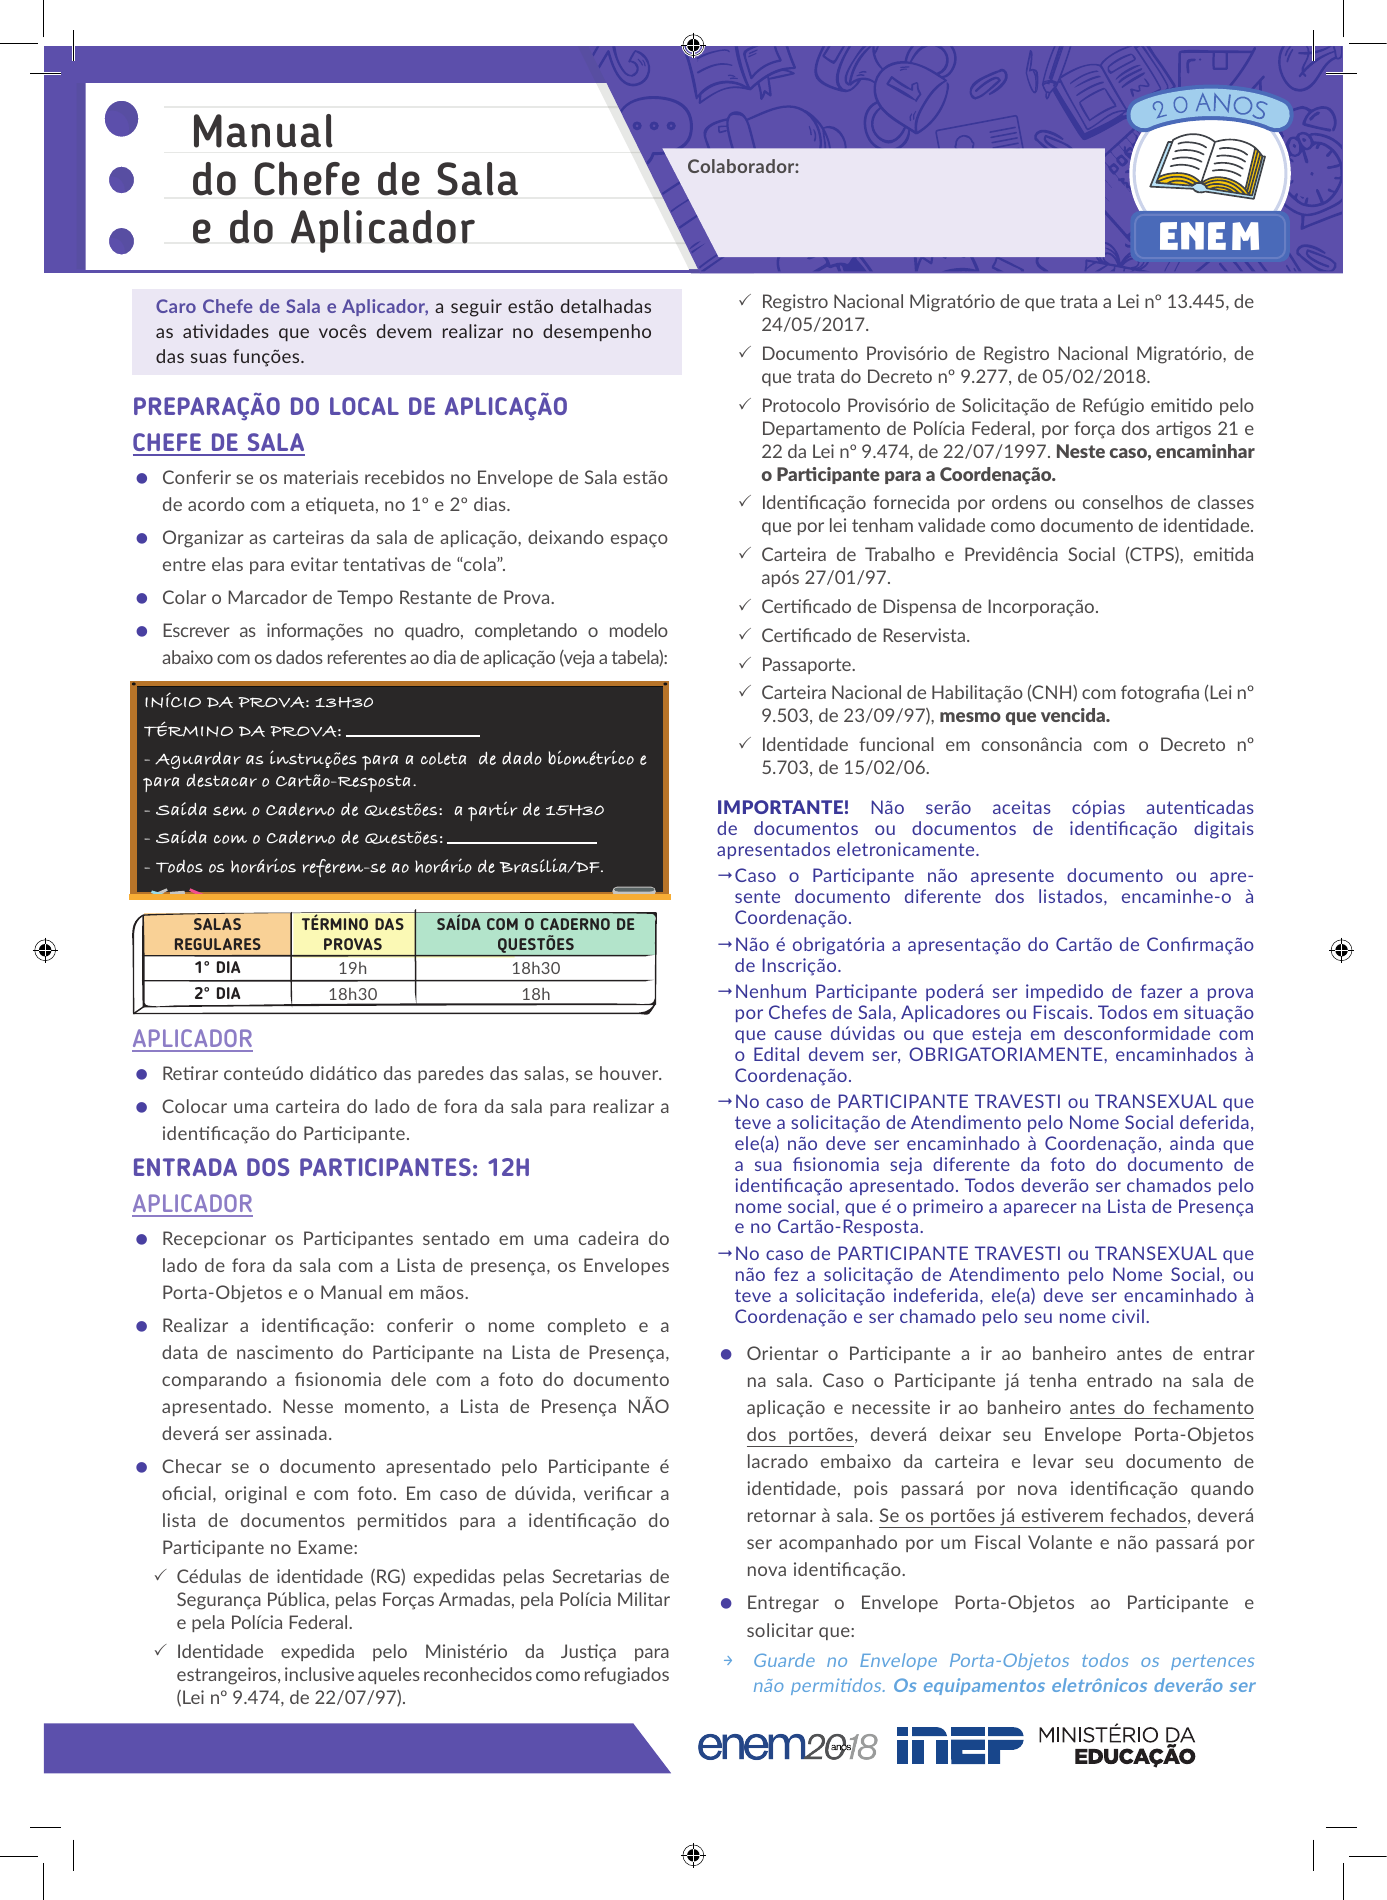 Page 1 of 4 - Manual CHEFE DE SALA